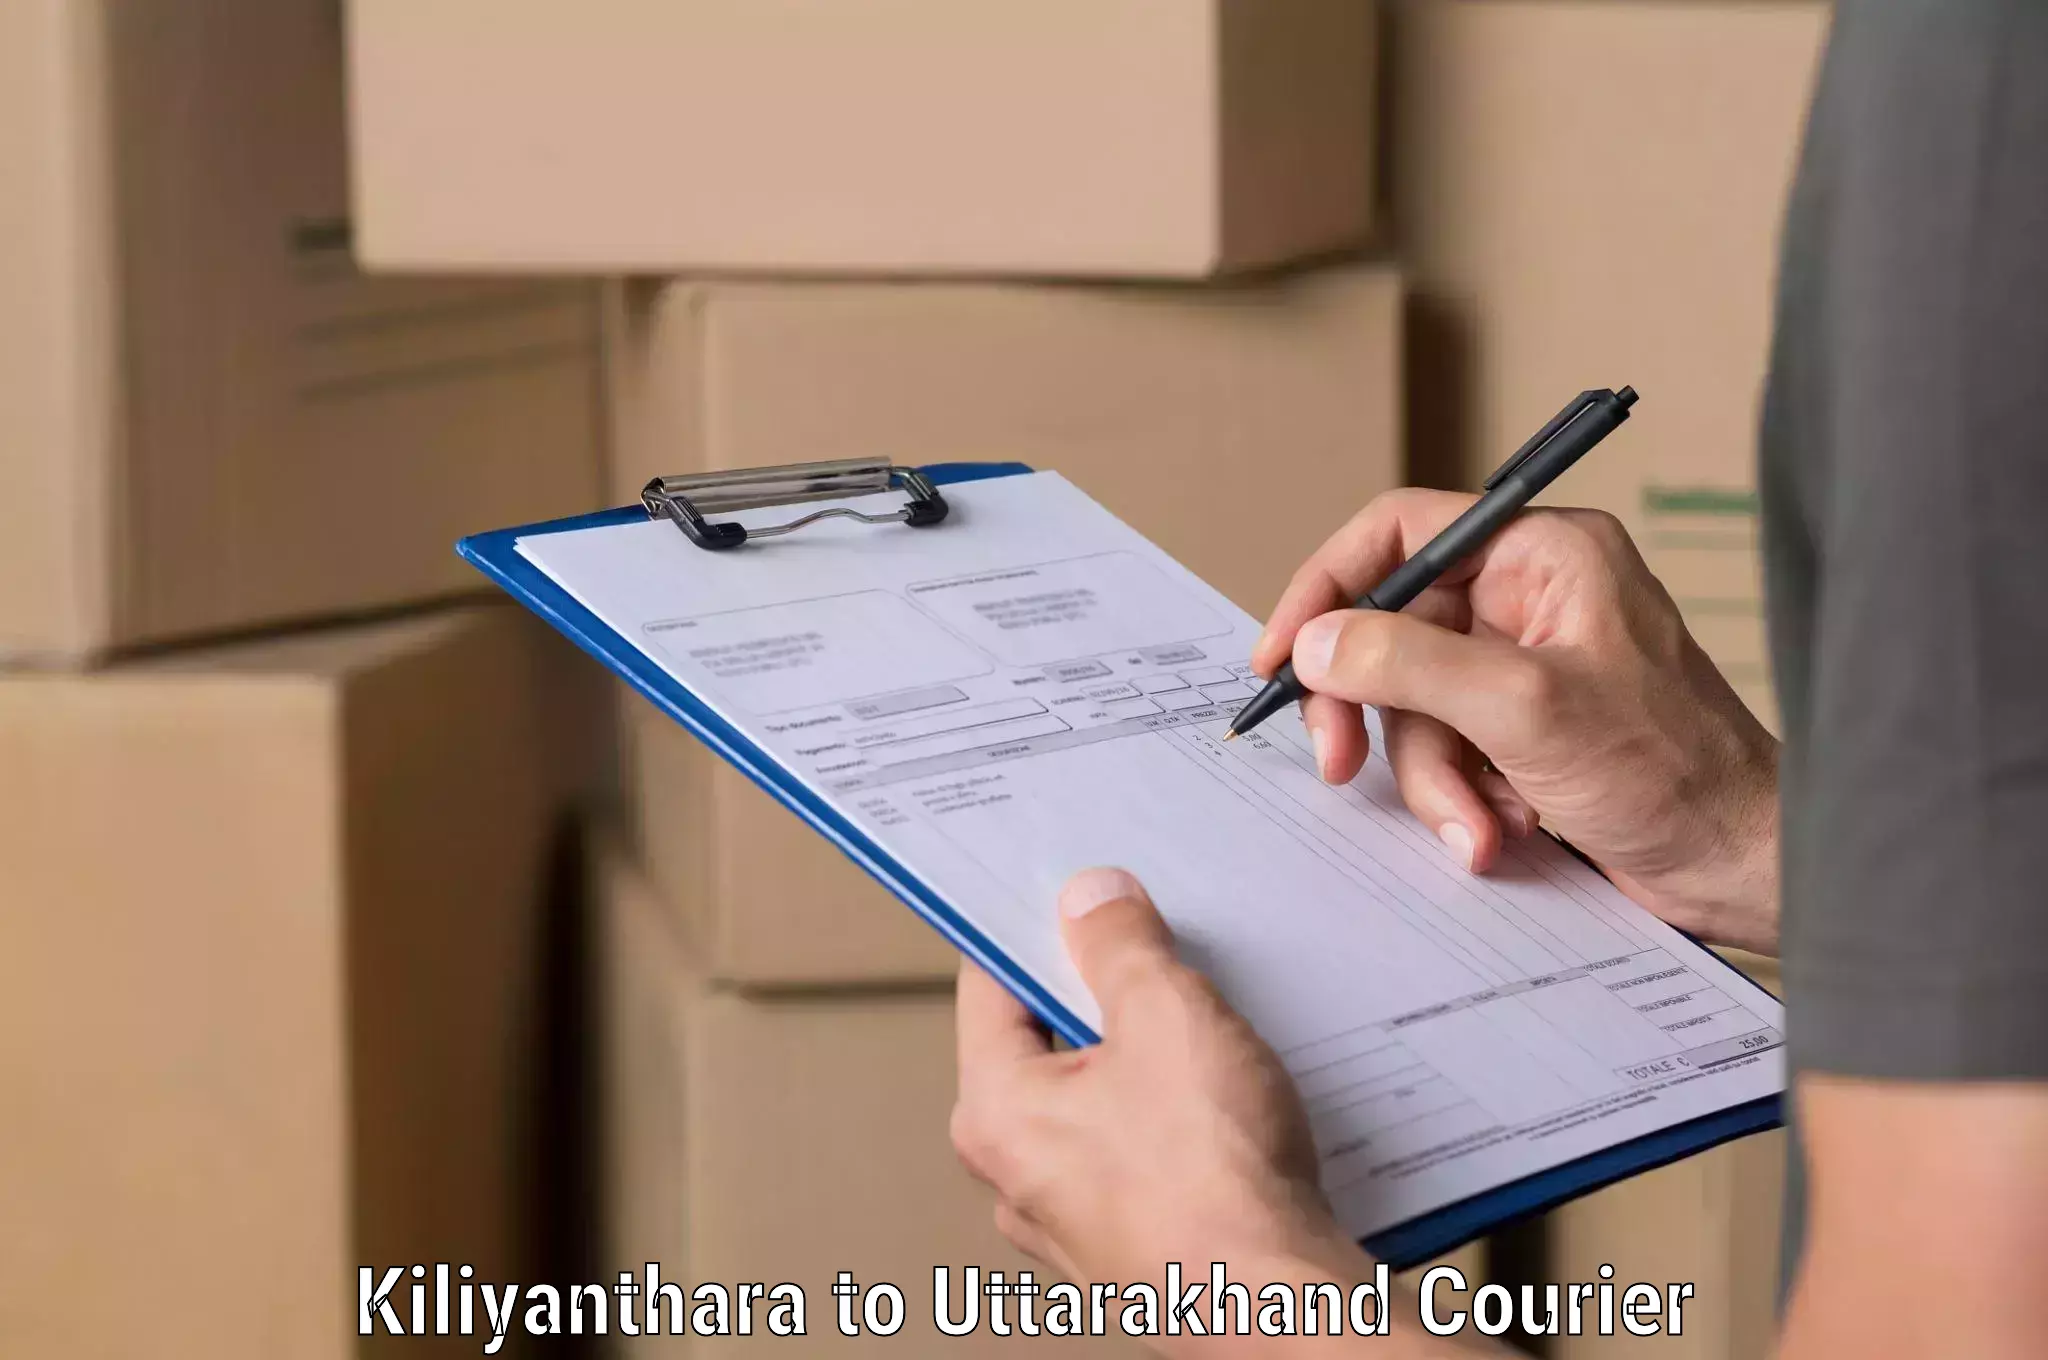 Efficient order fulfillment Kiliyanthara to Rishikesh